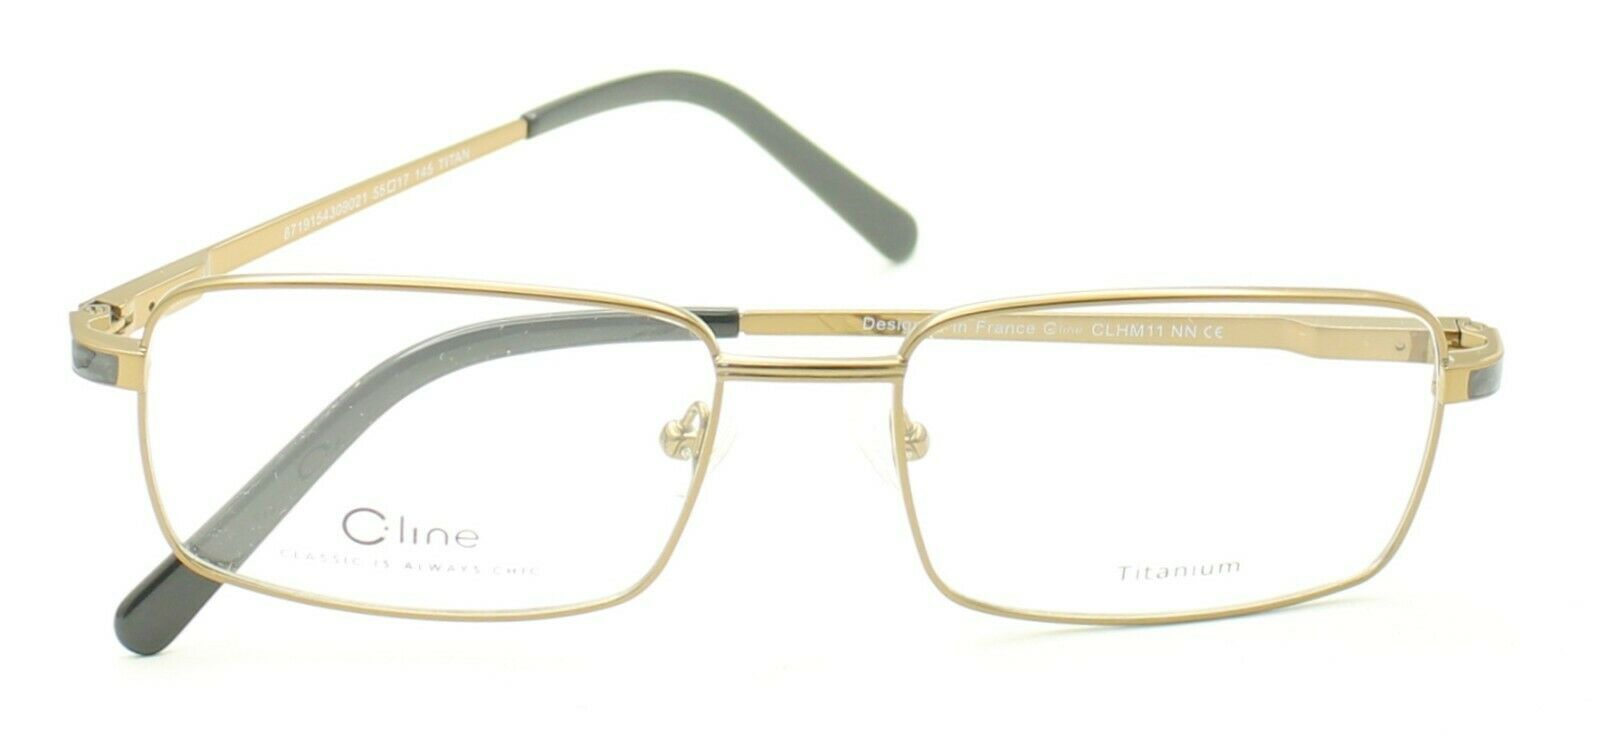 C-Line CLHM11 NN 55mm Titanium Eyewear FRAMES Glasses RX Optical Eyeglasses New